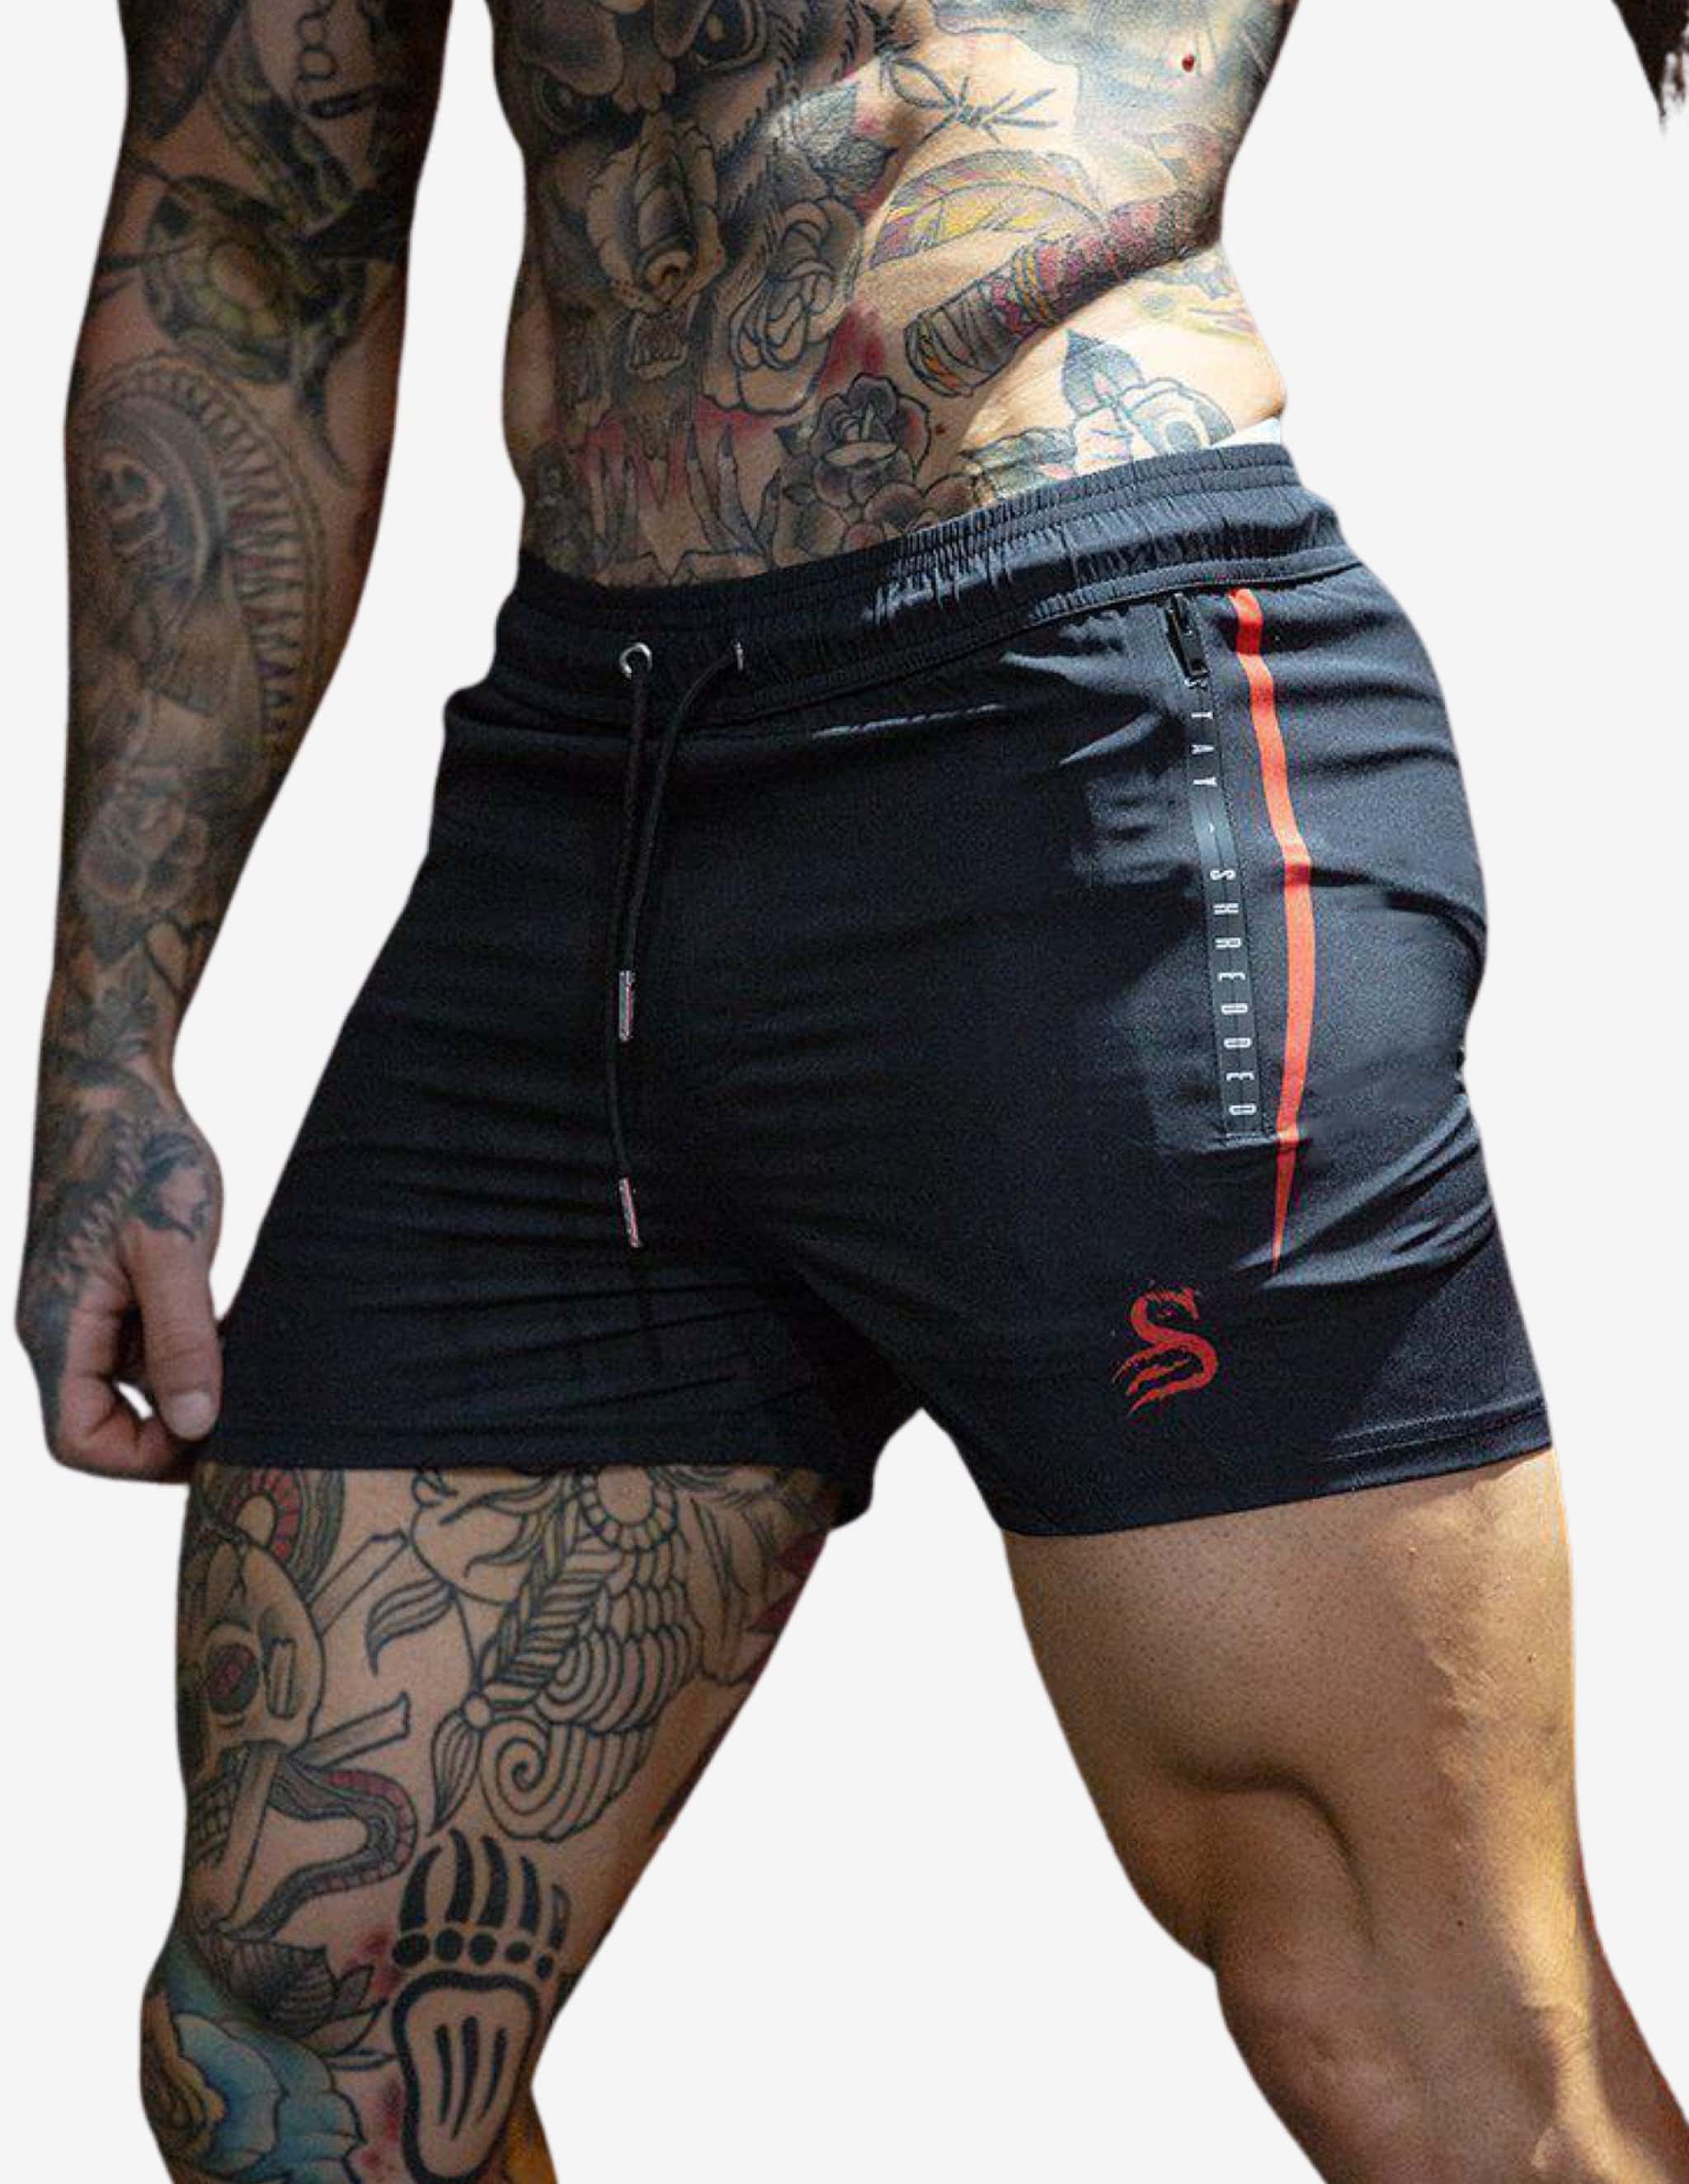 FLEX - Lifting Shorts - BLACK / RED | Stay Shredded | Guru Muscle